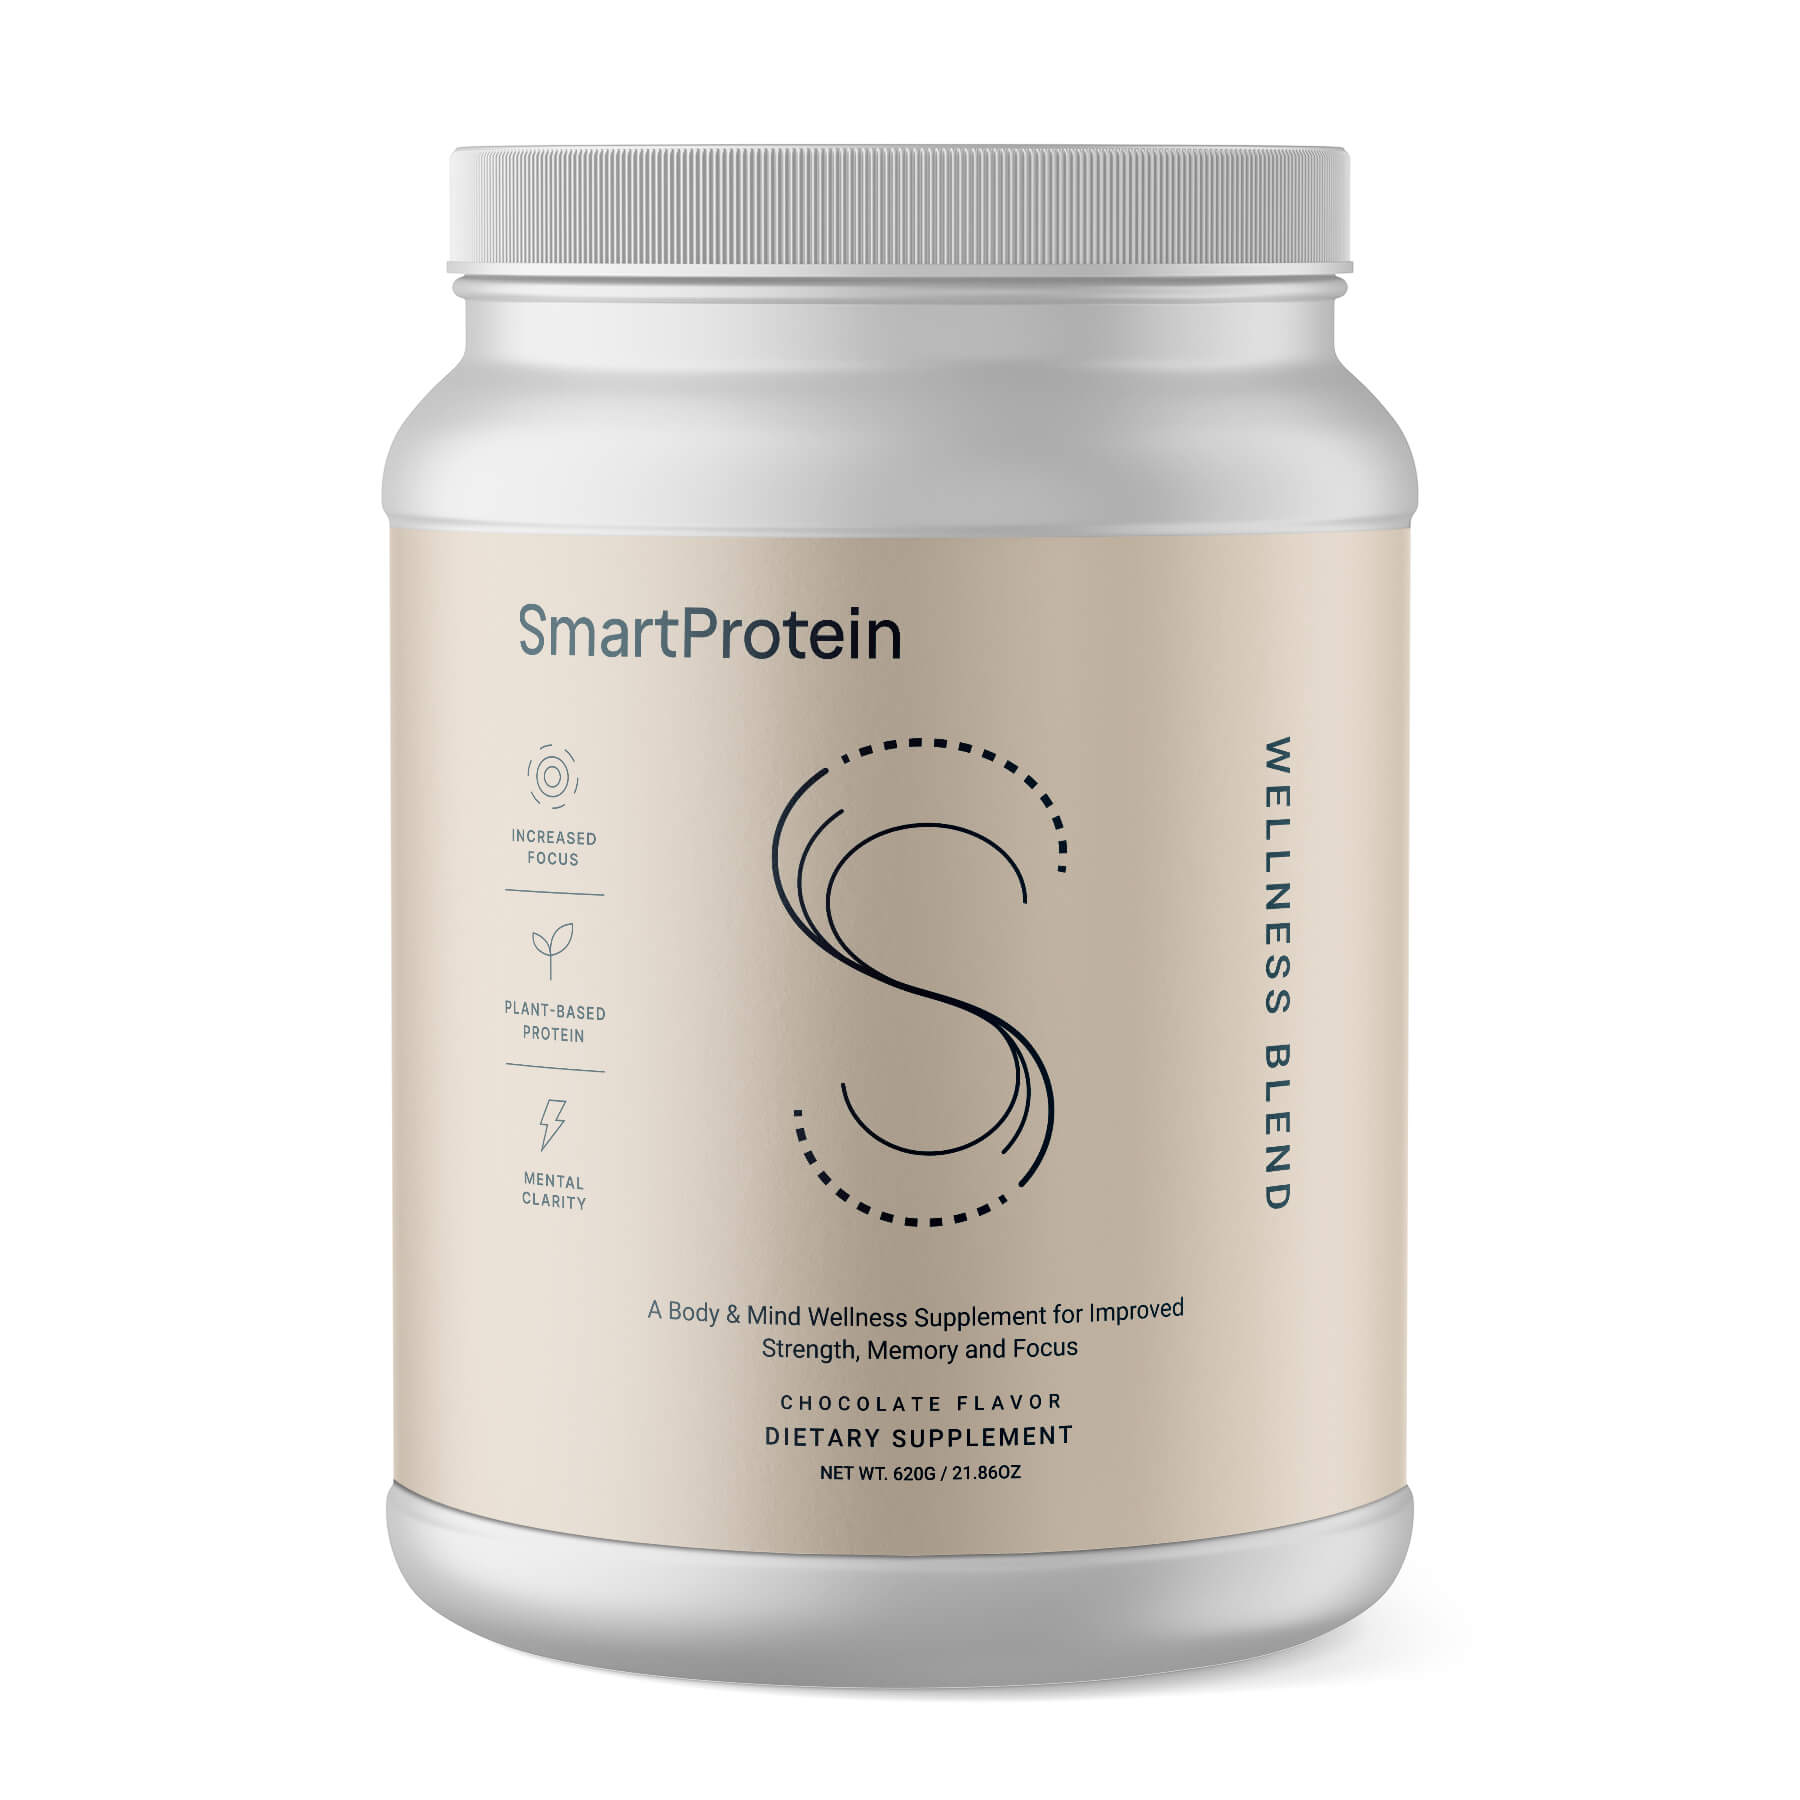 B VIBES PROseries Mini Smart Portable Protein Supplement Powder